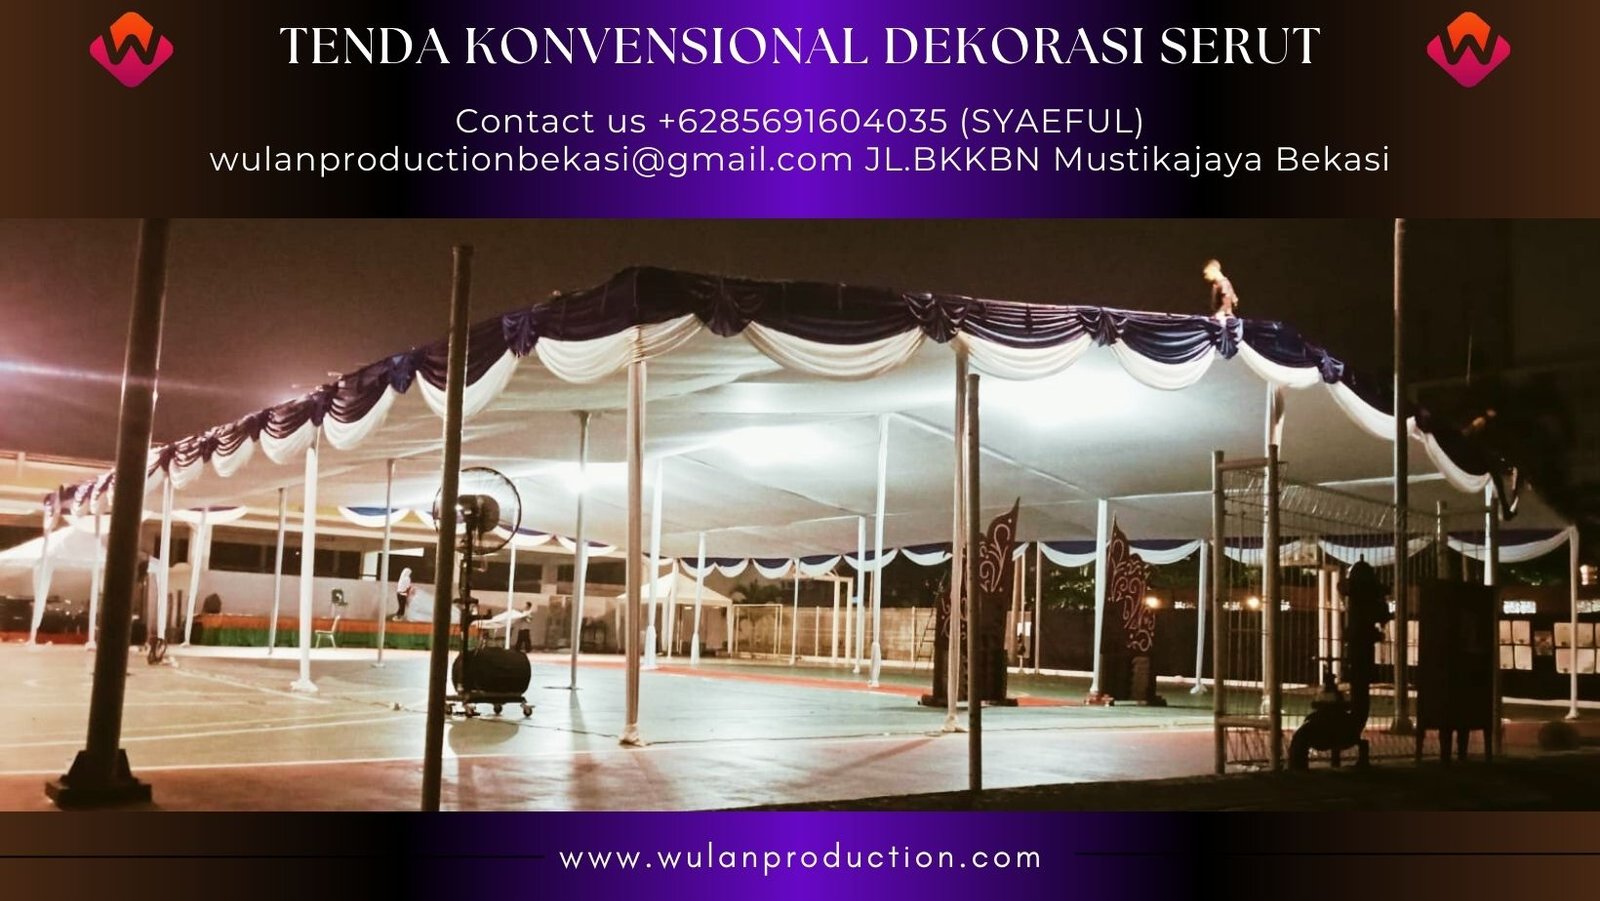 Sewa Tenda Konvensional Dekorasi Serut Siap Setting Di Jakarta